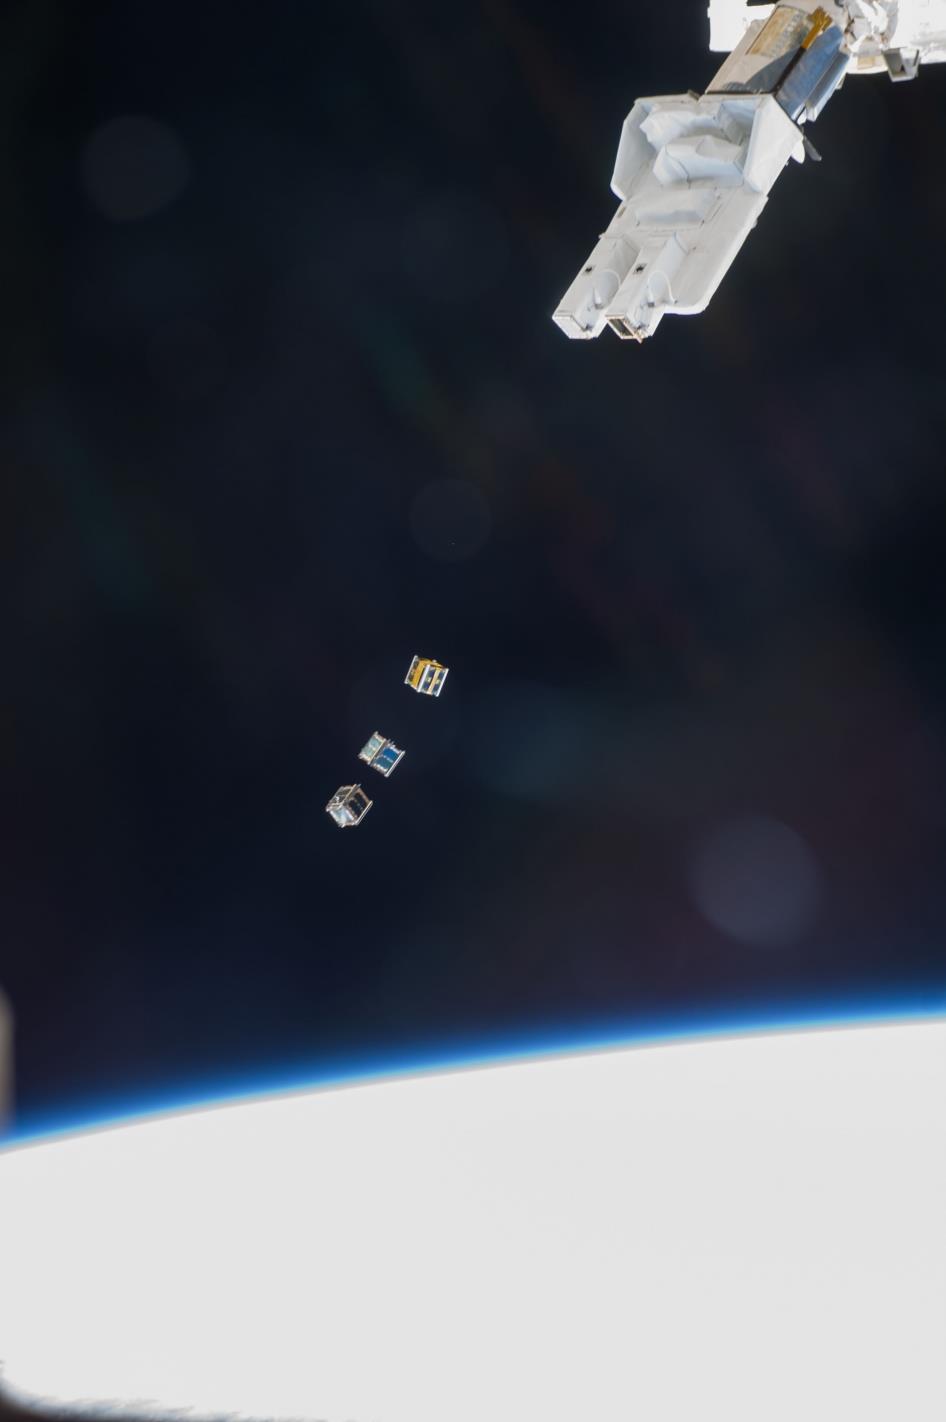 ISS Cubesat